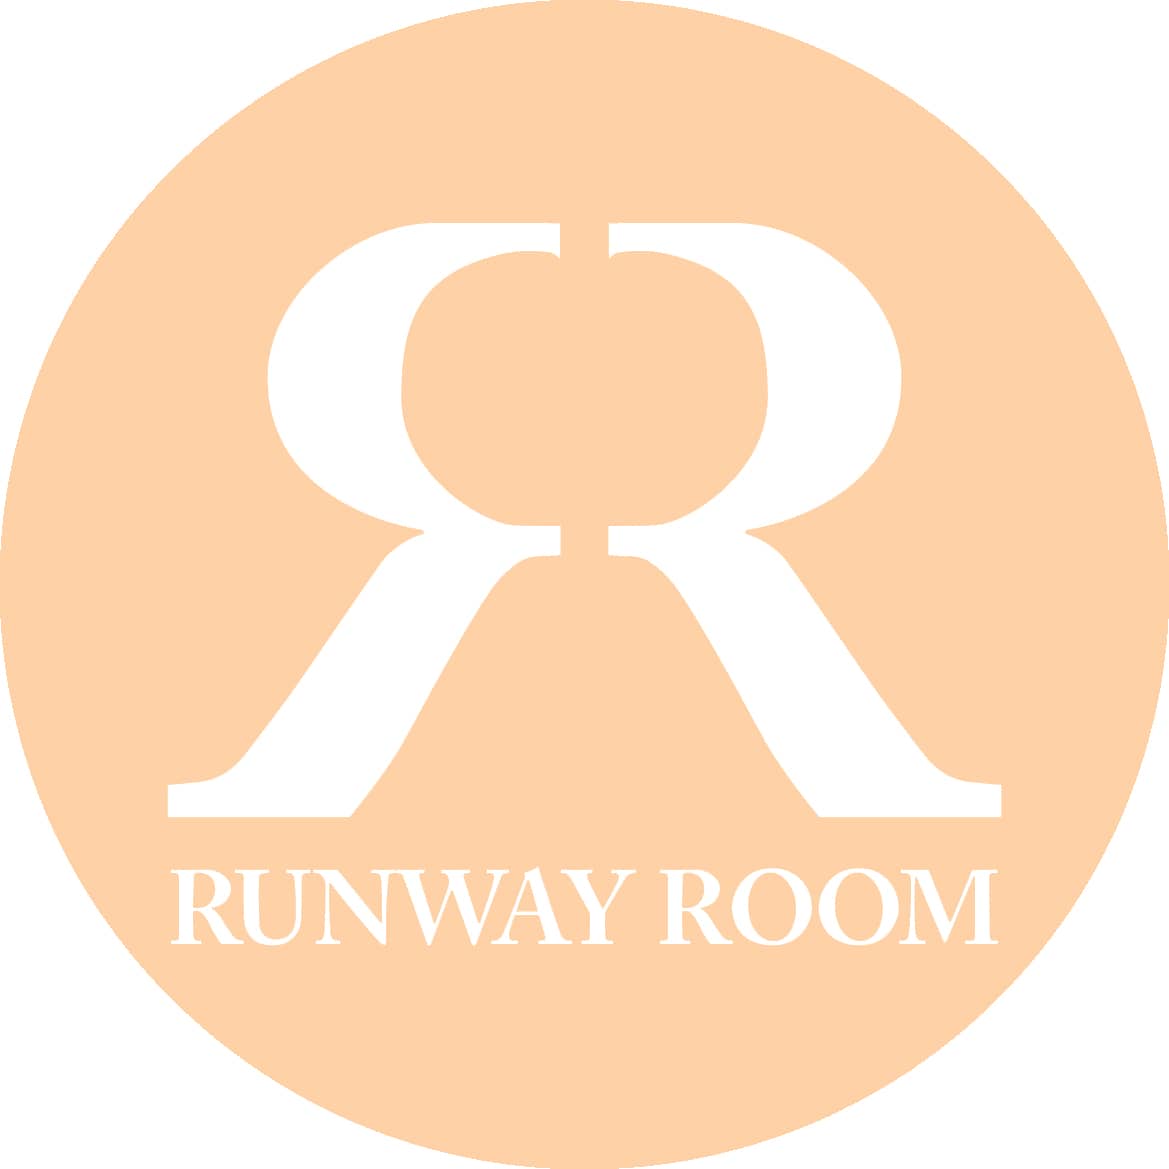 Pastel Orange Logo - Runway Room logo pastel orange Vector file